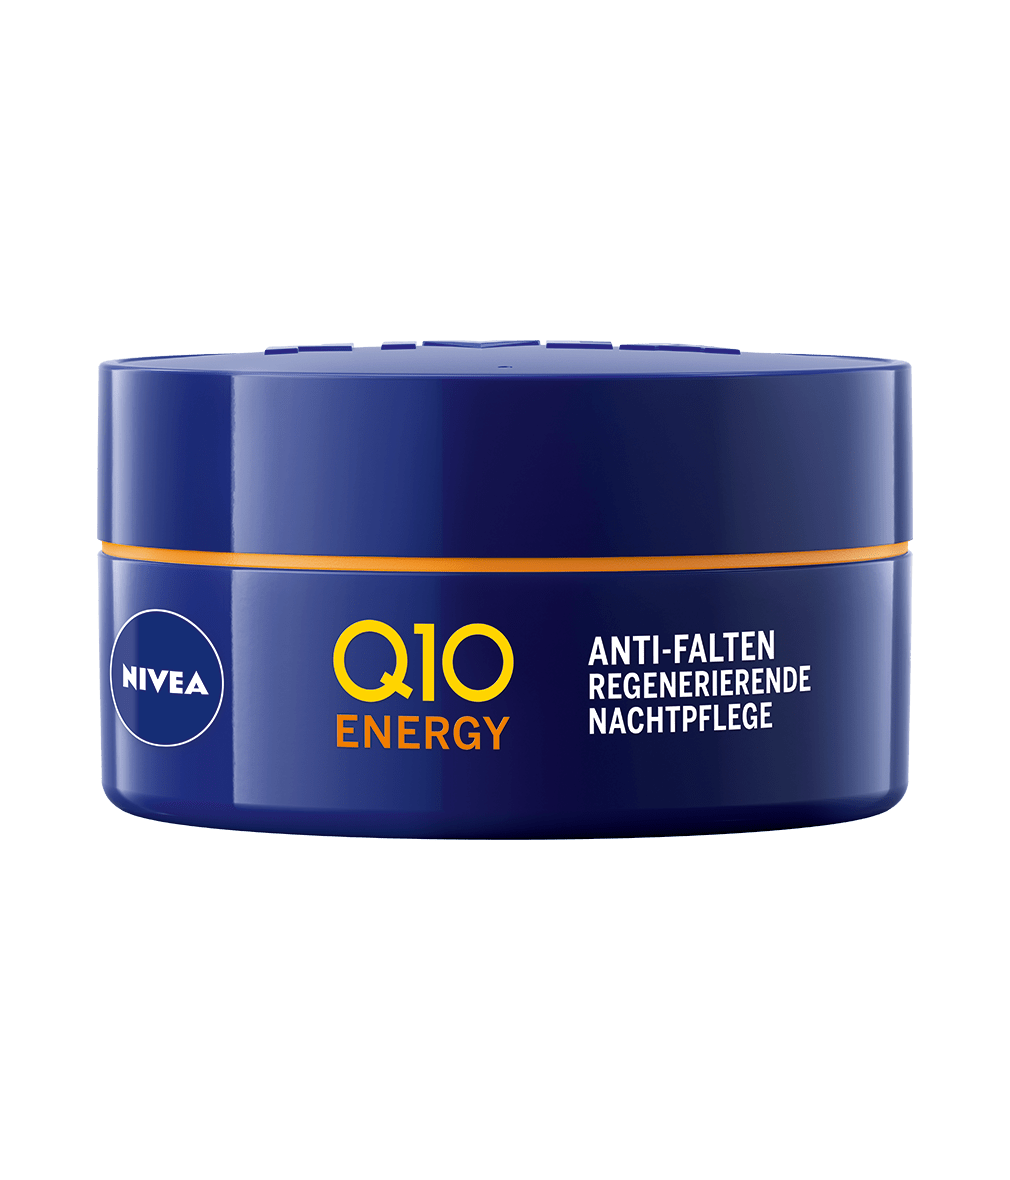 NIVEA Q10 Energy Regenerierende Nachtpflege 50 ml